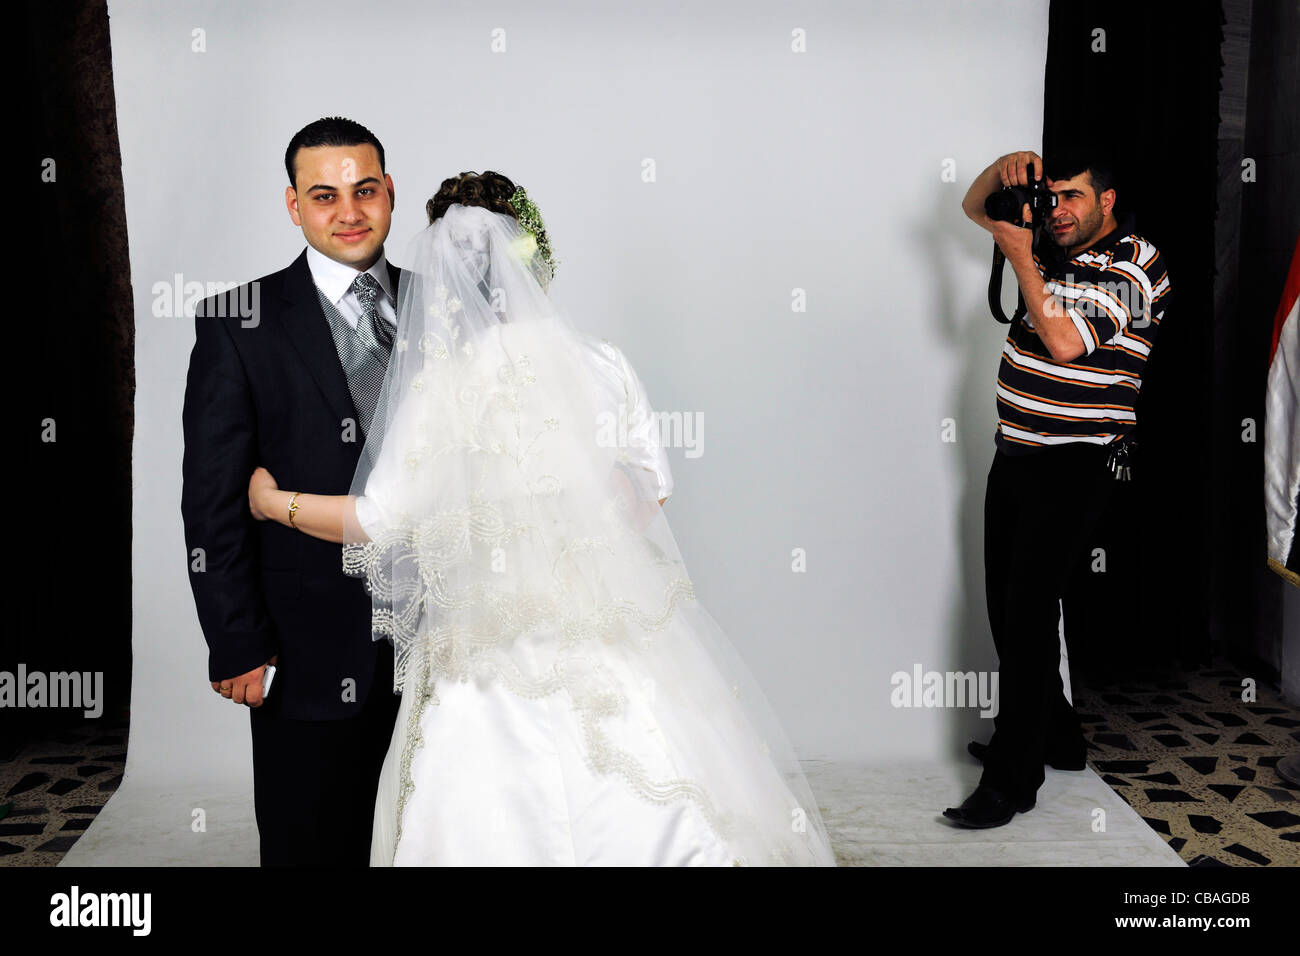 Iraq, Baghdad. At the wedding photographer. Stock Photo